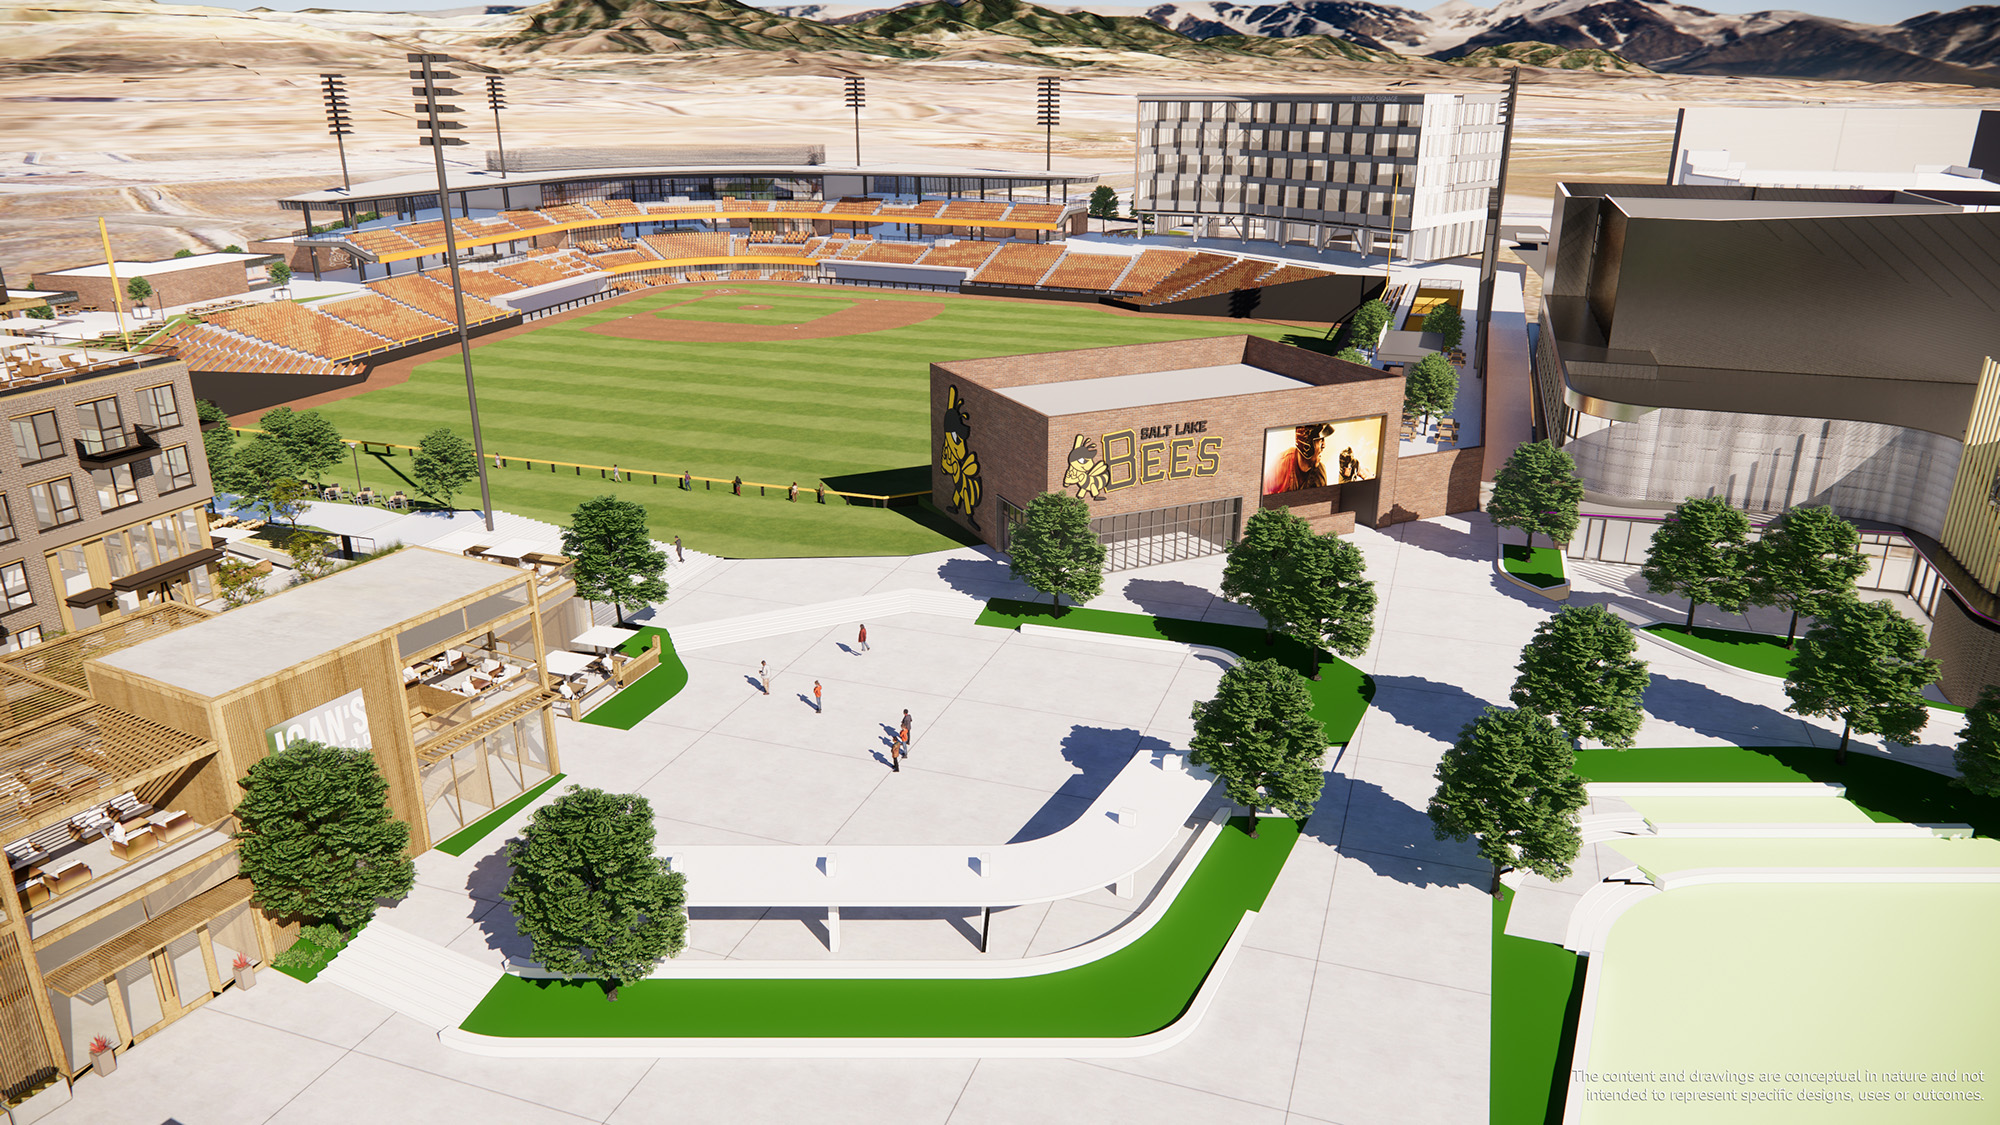 Salt Lake Bees baseball relocating to new field in Daybreak in 2025